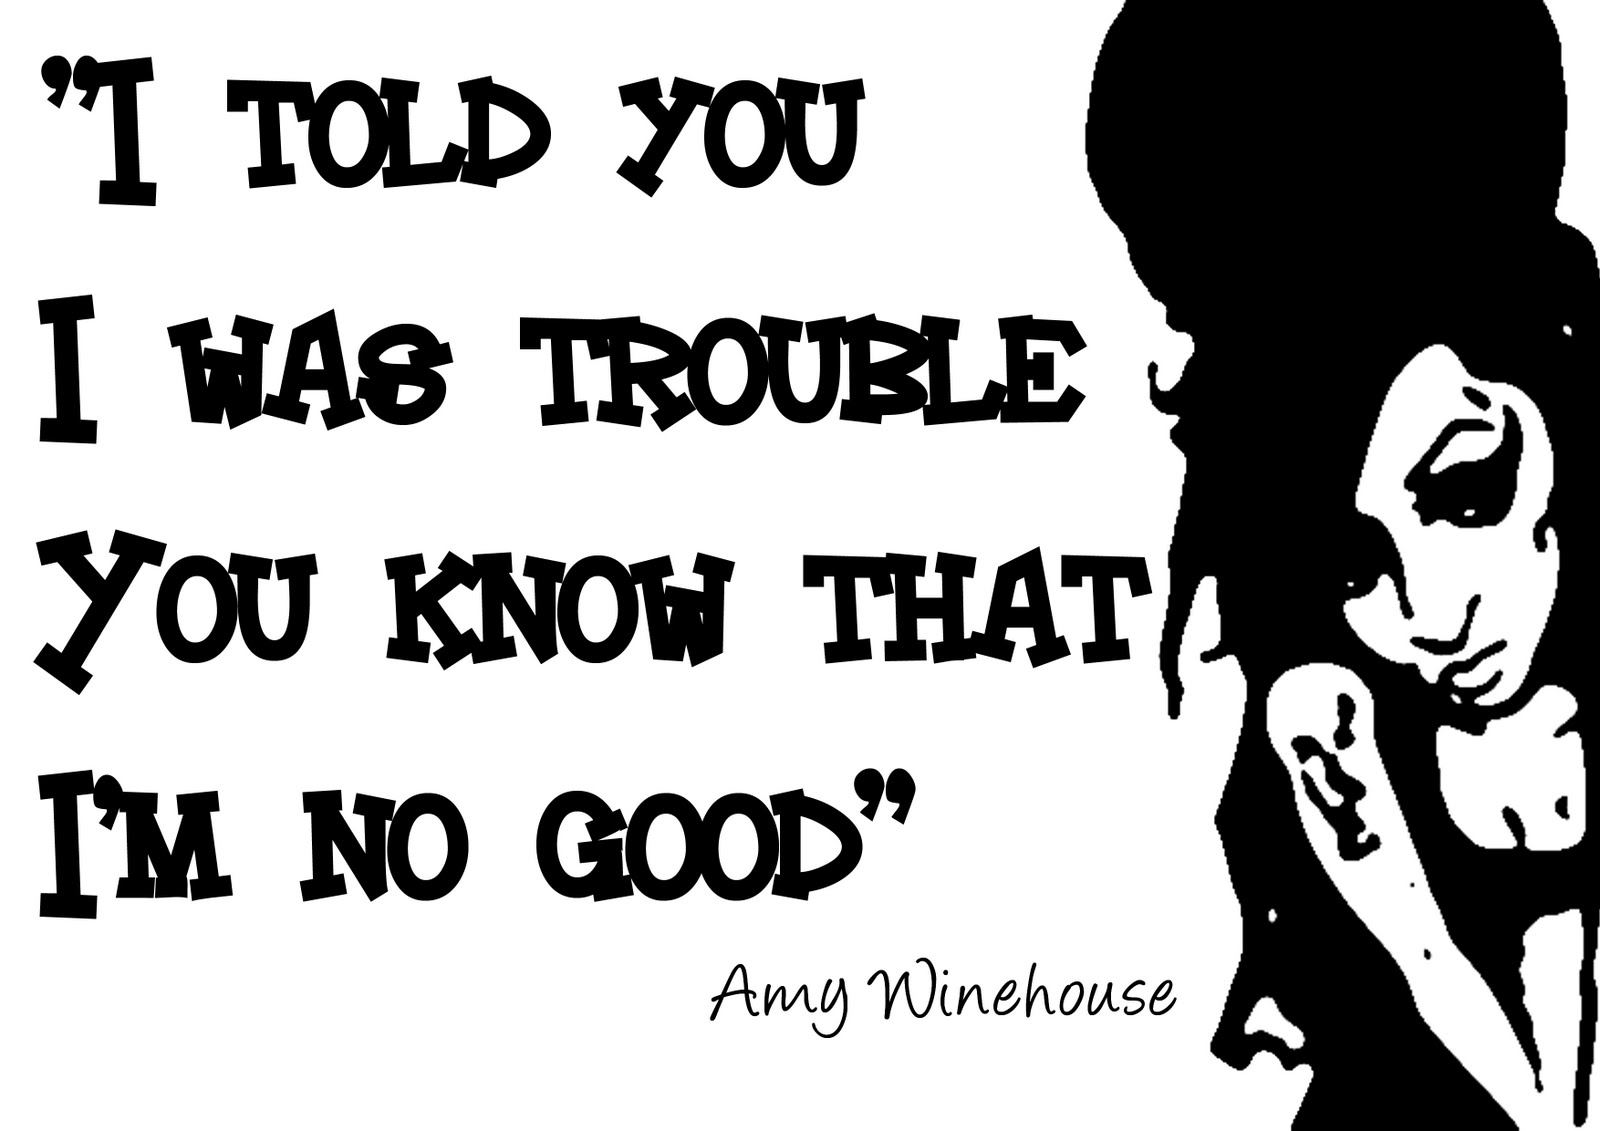 https://blogger.googleusercontent.com/img/b/R29vZ2xl/AVvXsEh9StRKN8Hl5tv9TgbFbwQ88SbibJeCmnqv6KhtAKb6Tlgh8DgDd1wxM7oJGhYsCKYvMAUjmRor6QplI0Ycll1MVphMQSTiLTM1l9vxlH0FthOFTeDkausoPa4xPdlJ-7eRkp3MHDPgTPkD/s1600/Amy+Winehouse-1.jpg